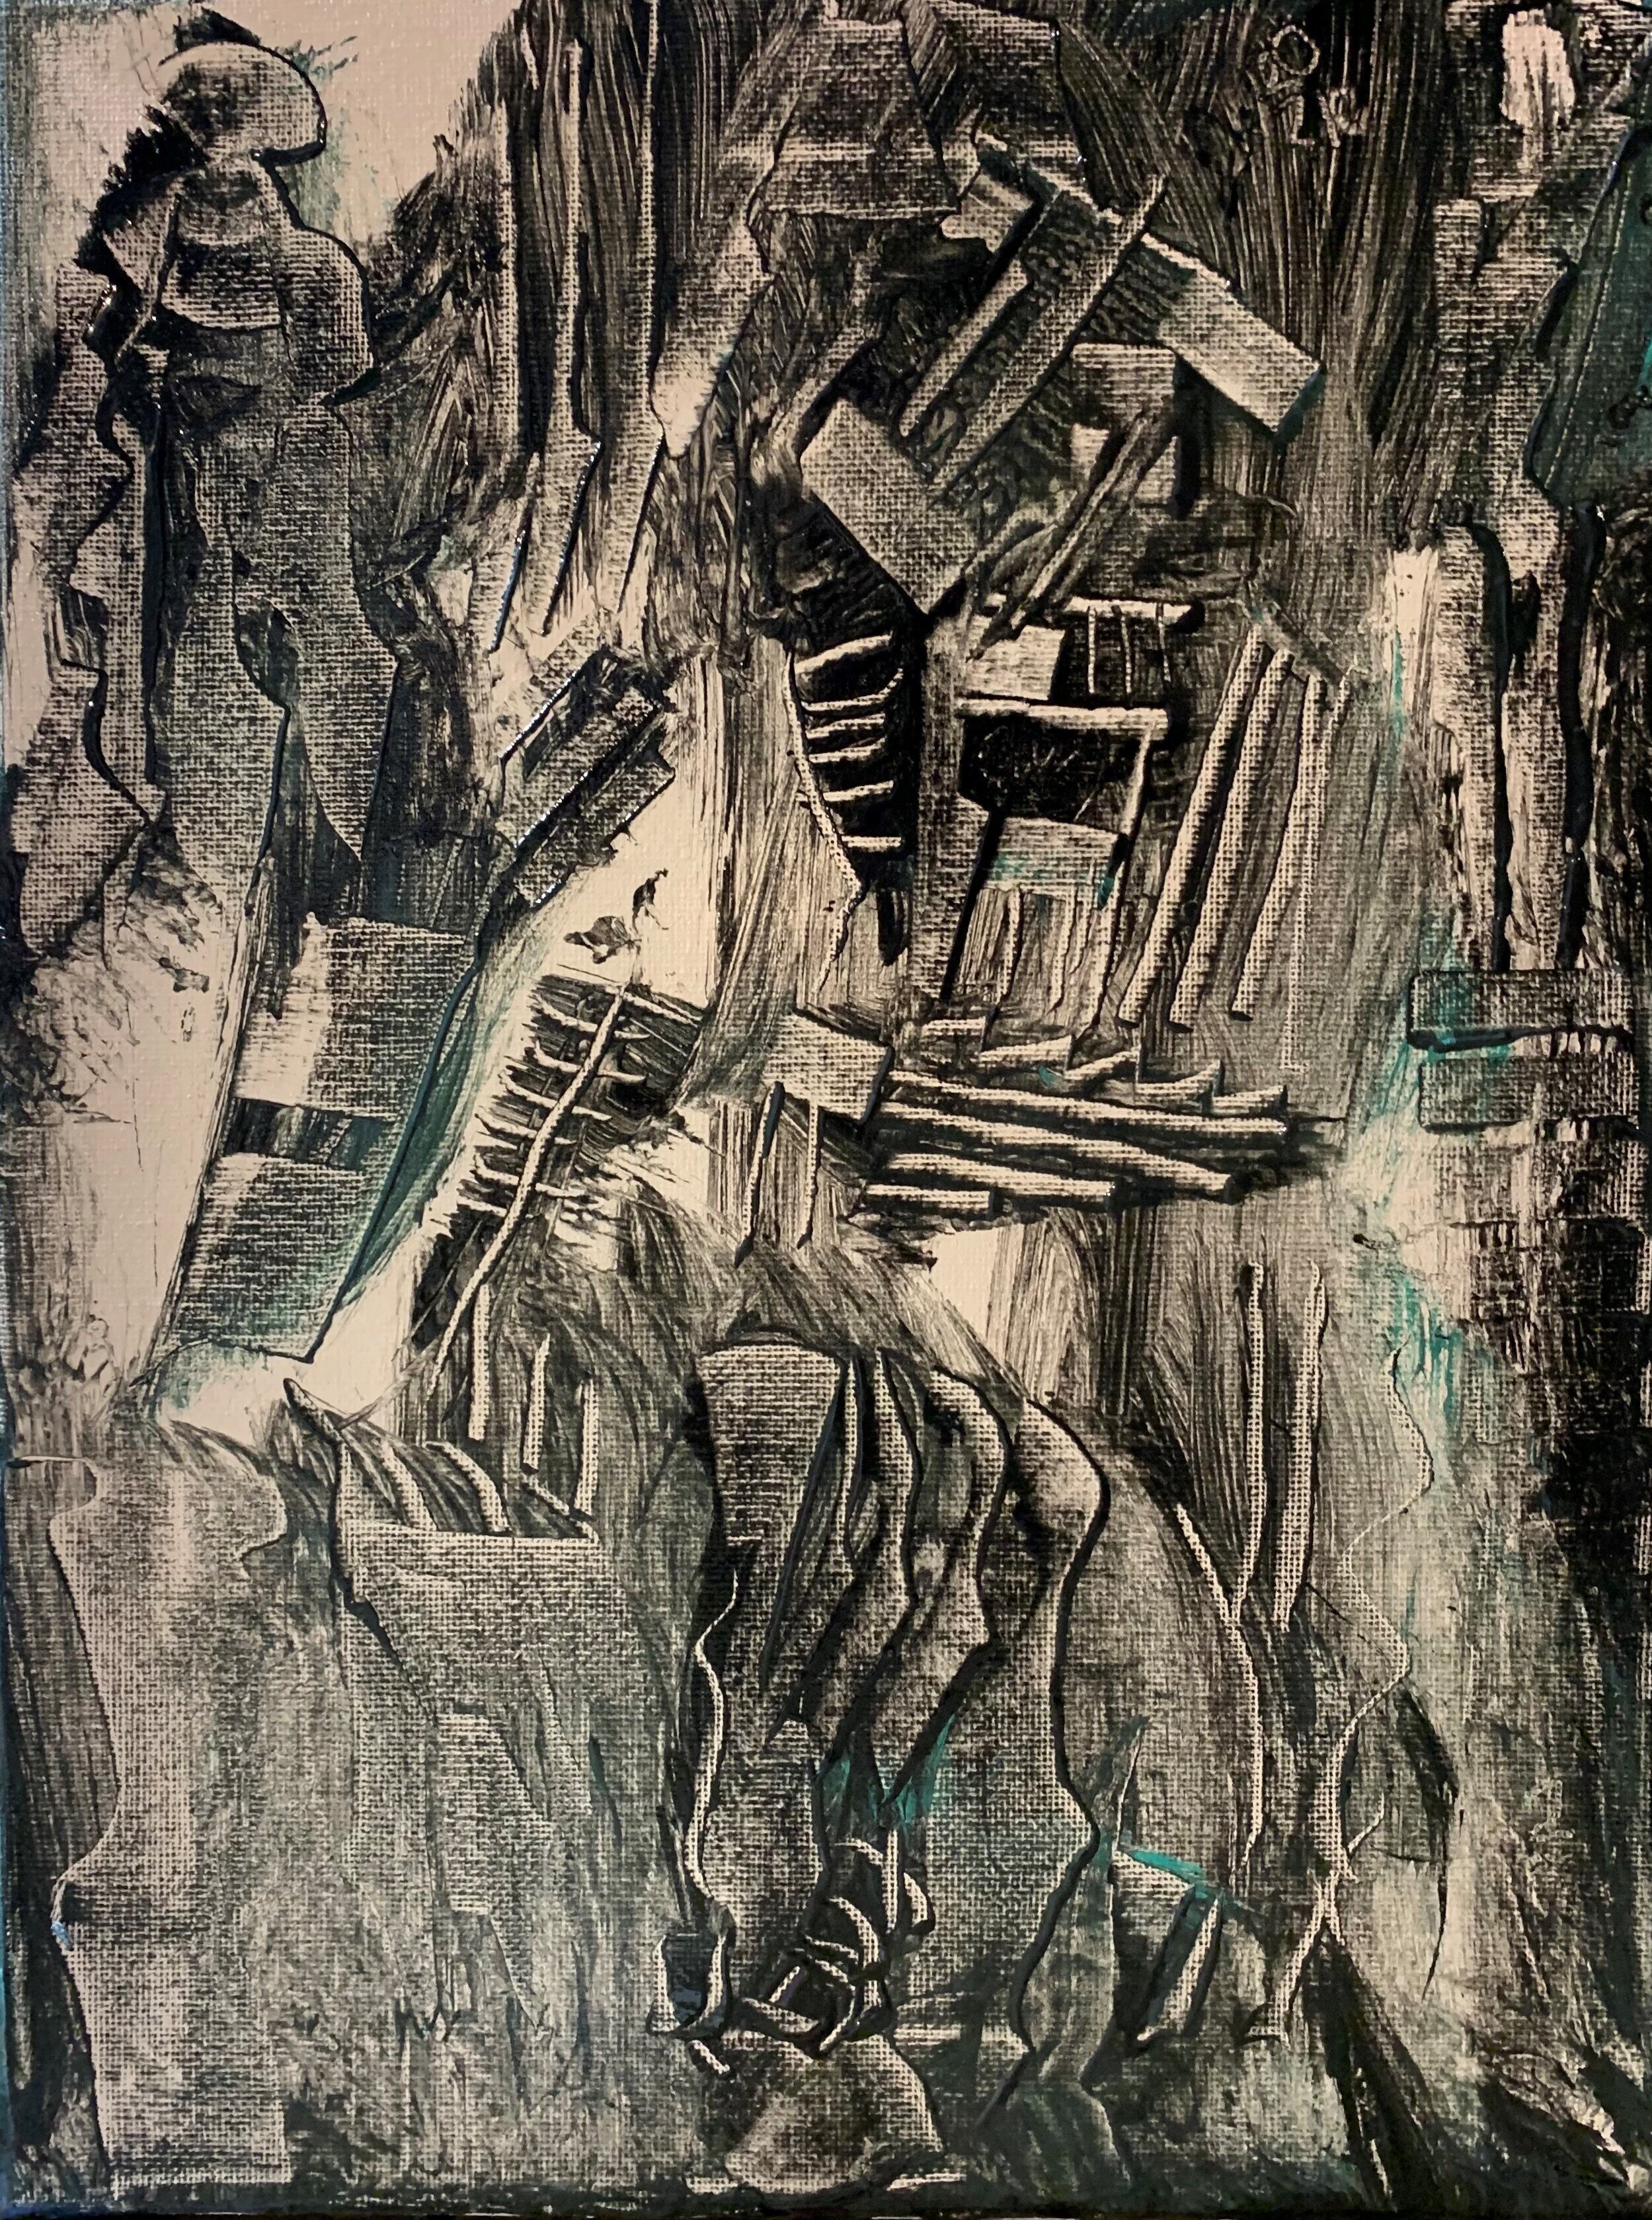  Salvage, 2021, 12" x 9", Acrylic on Canvas 